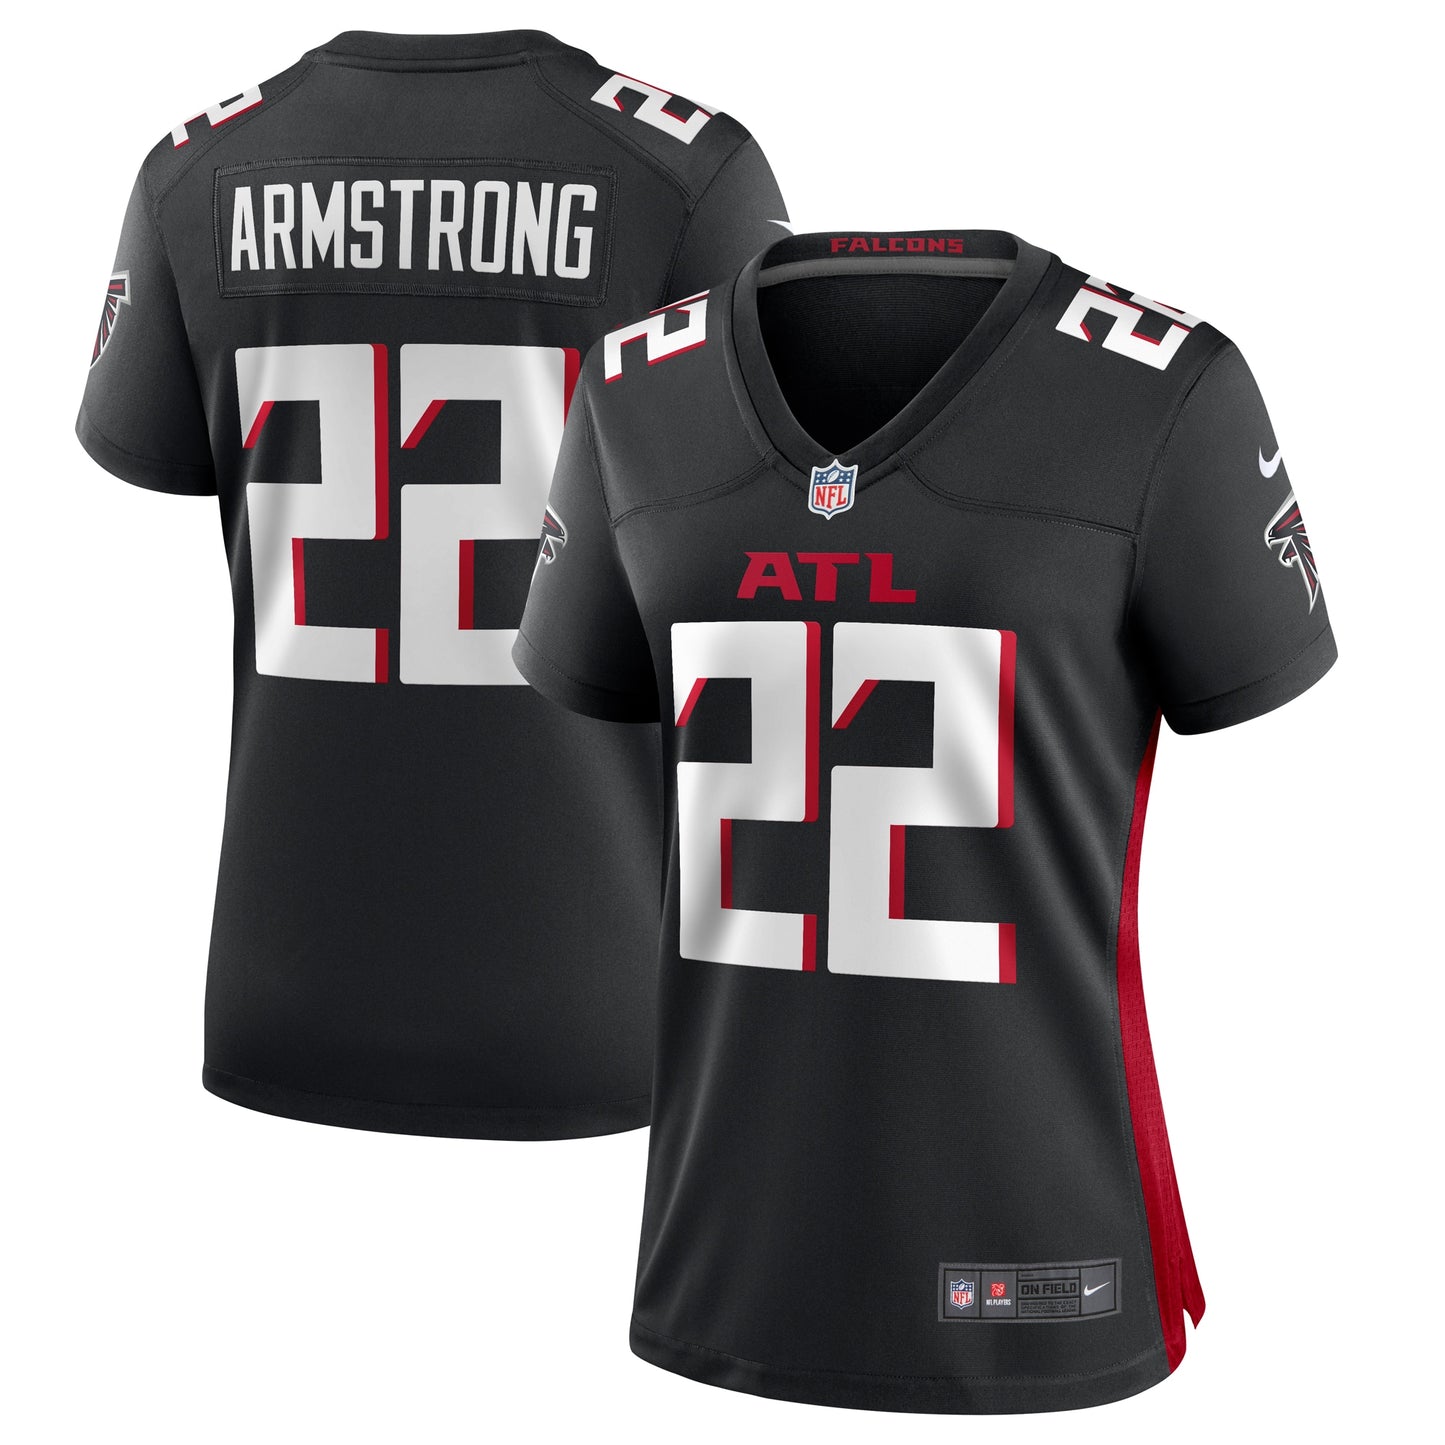 Cornell Armstrong Atlanta Falcons Nike Women's Team Game Jersey - Black